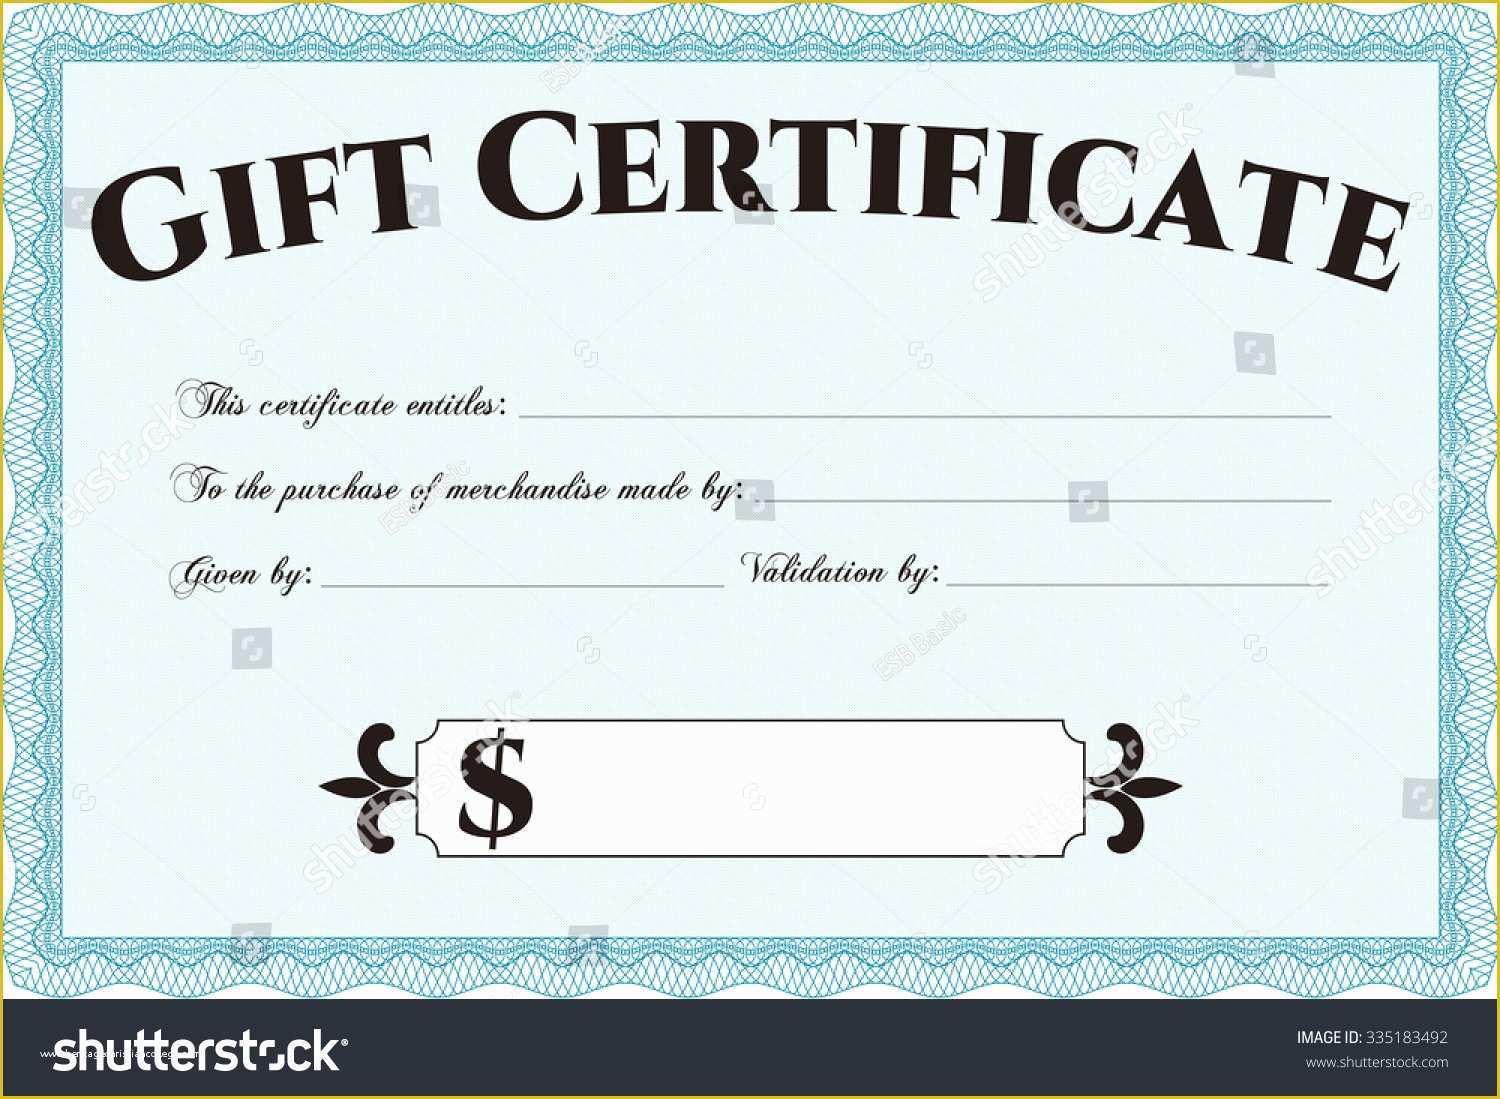 Customizable Certificate Templates Free Of Gift Certificate Template Customizable Easy to Edit and